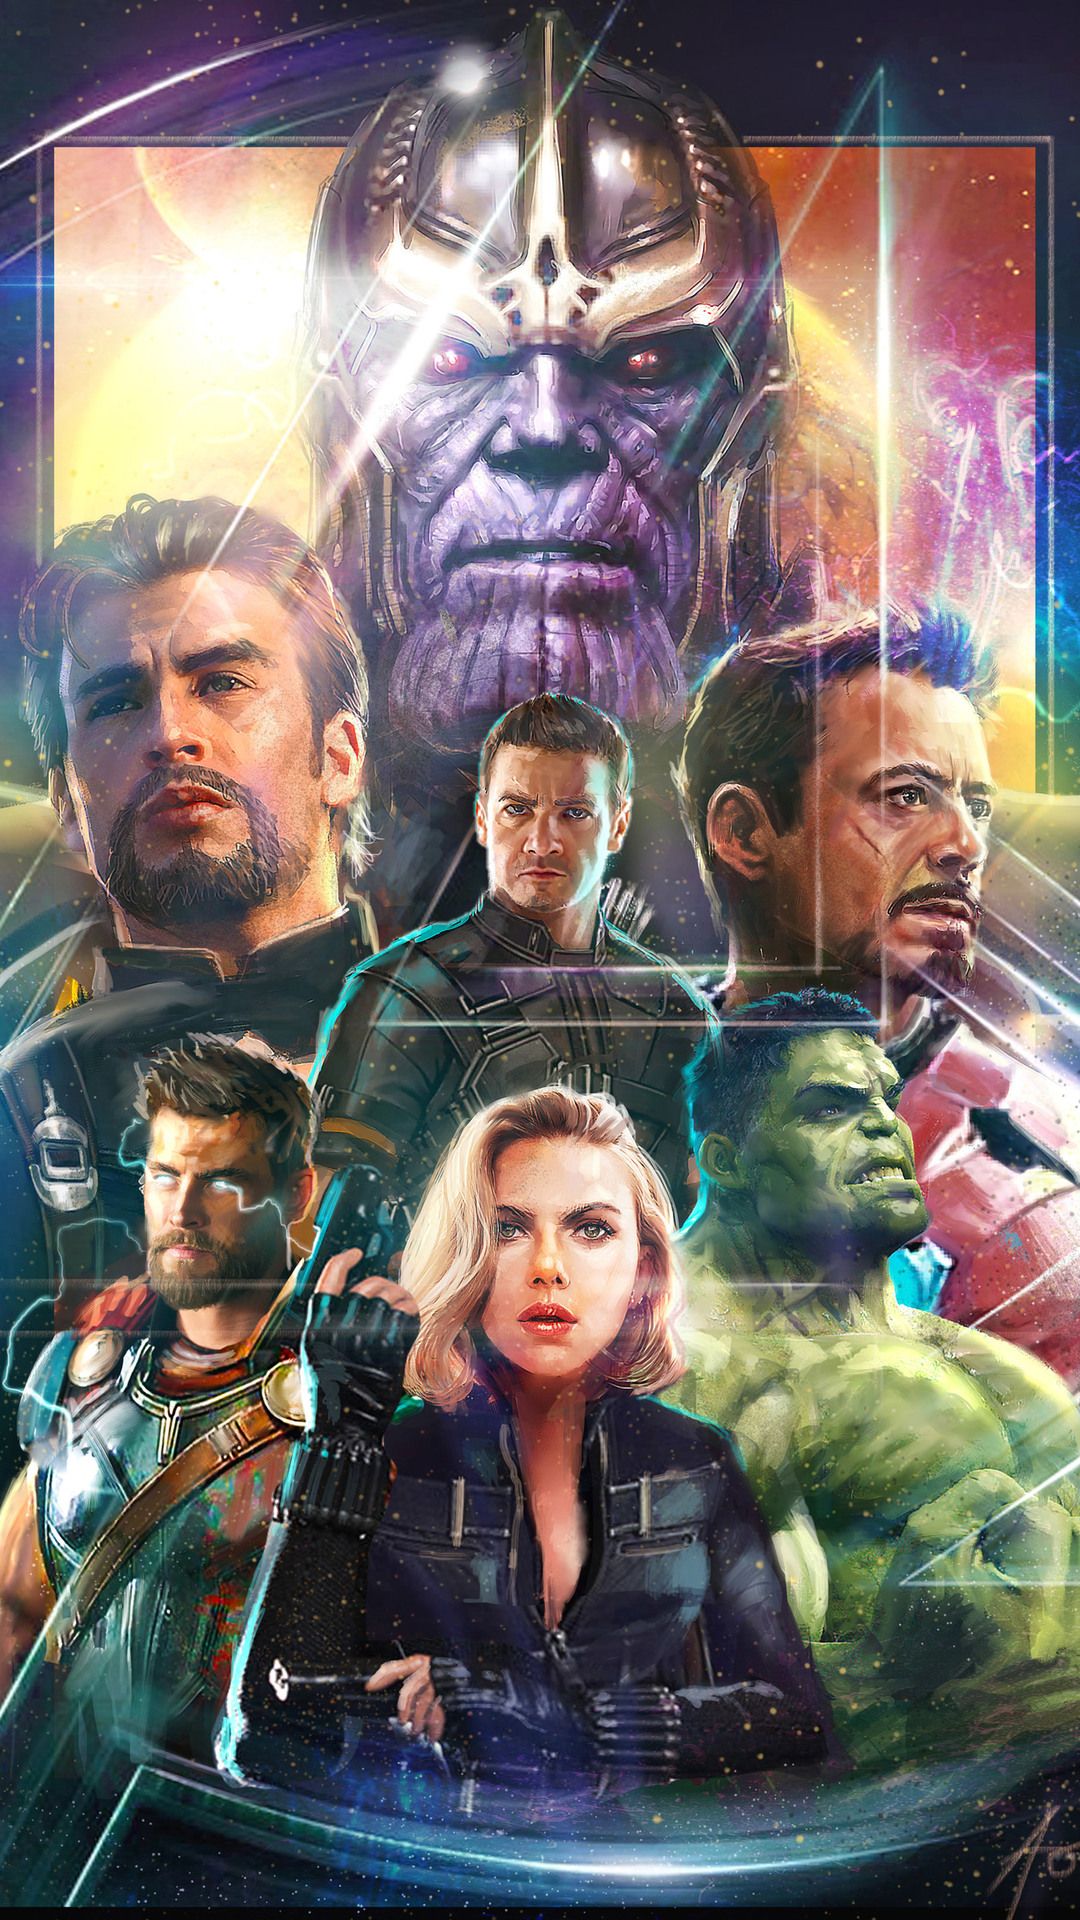 Avengers Infinity War - Descarga fondos de pantalla 4k para iPhone y Android